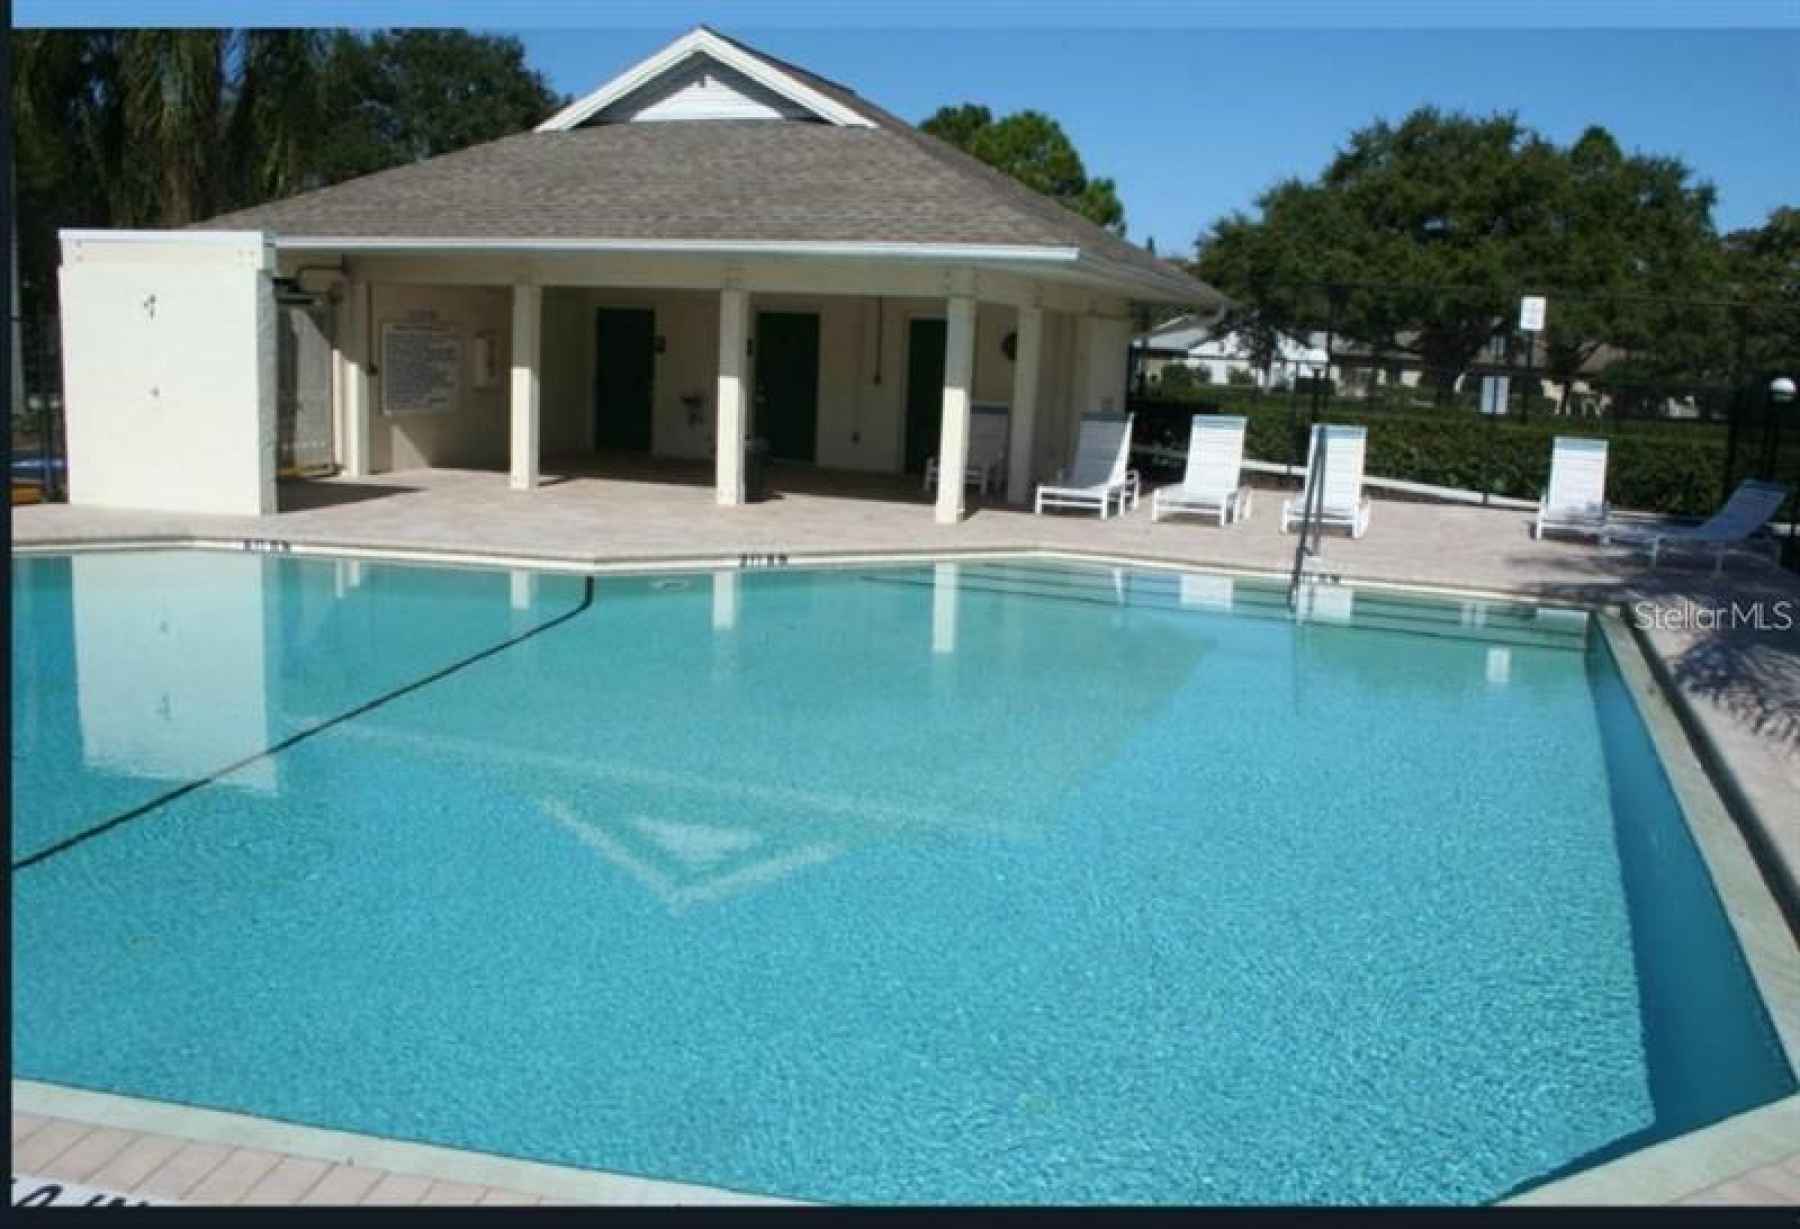 Community pool.